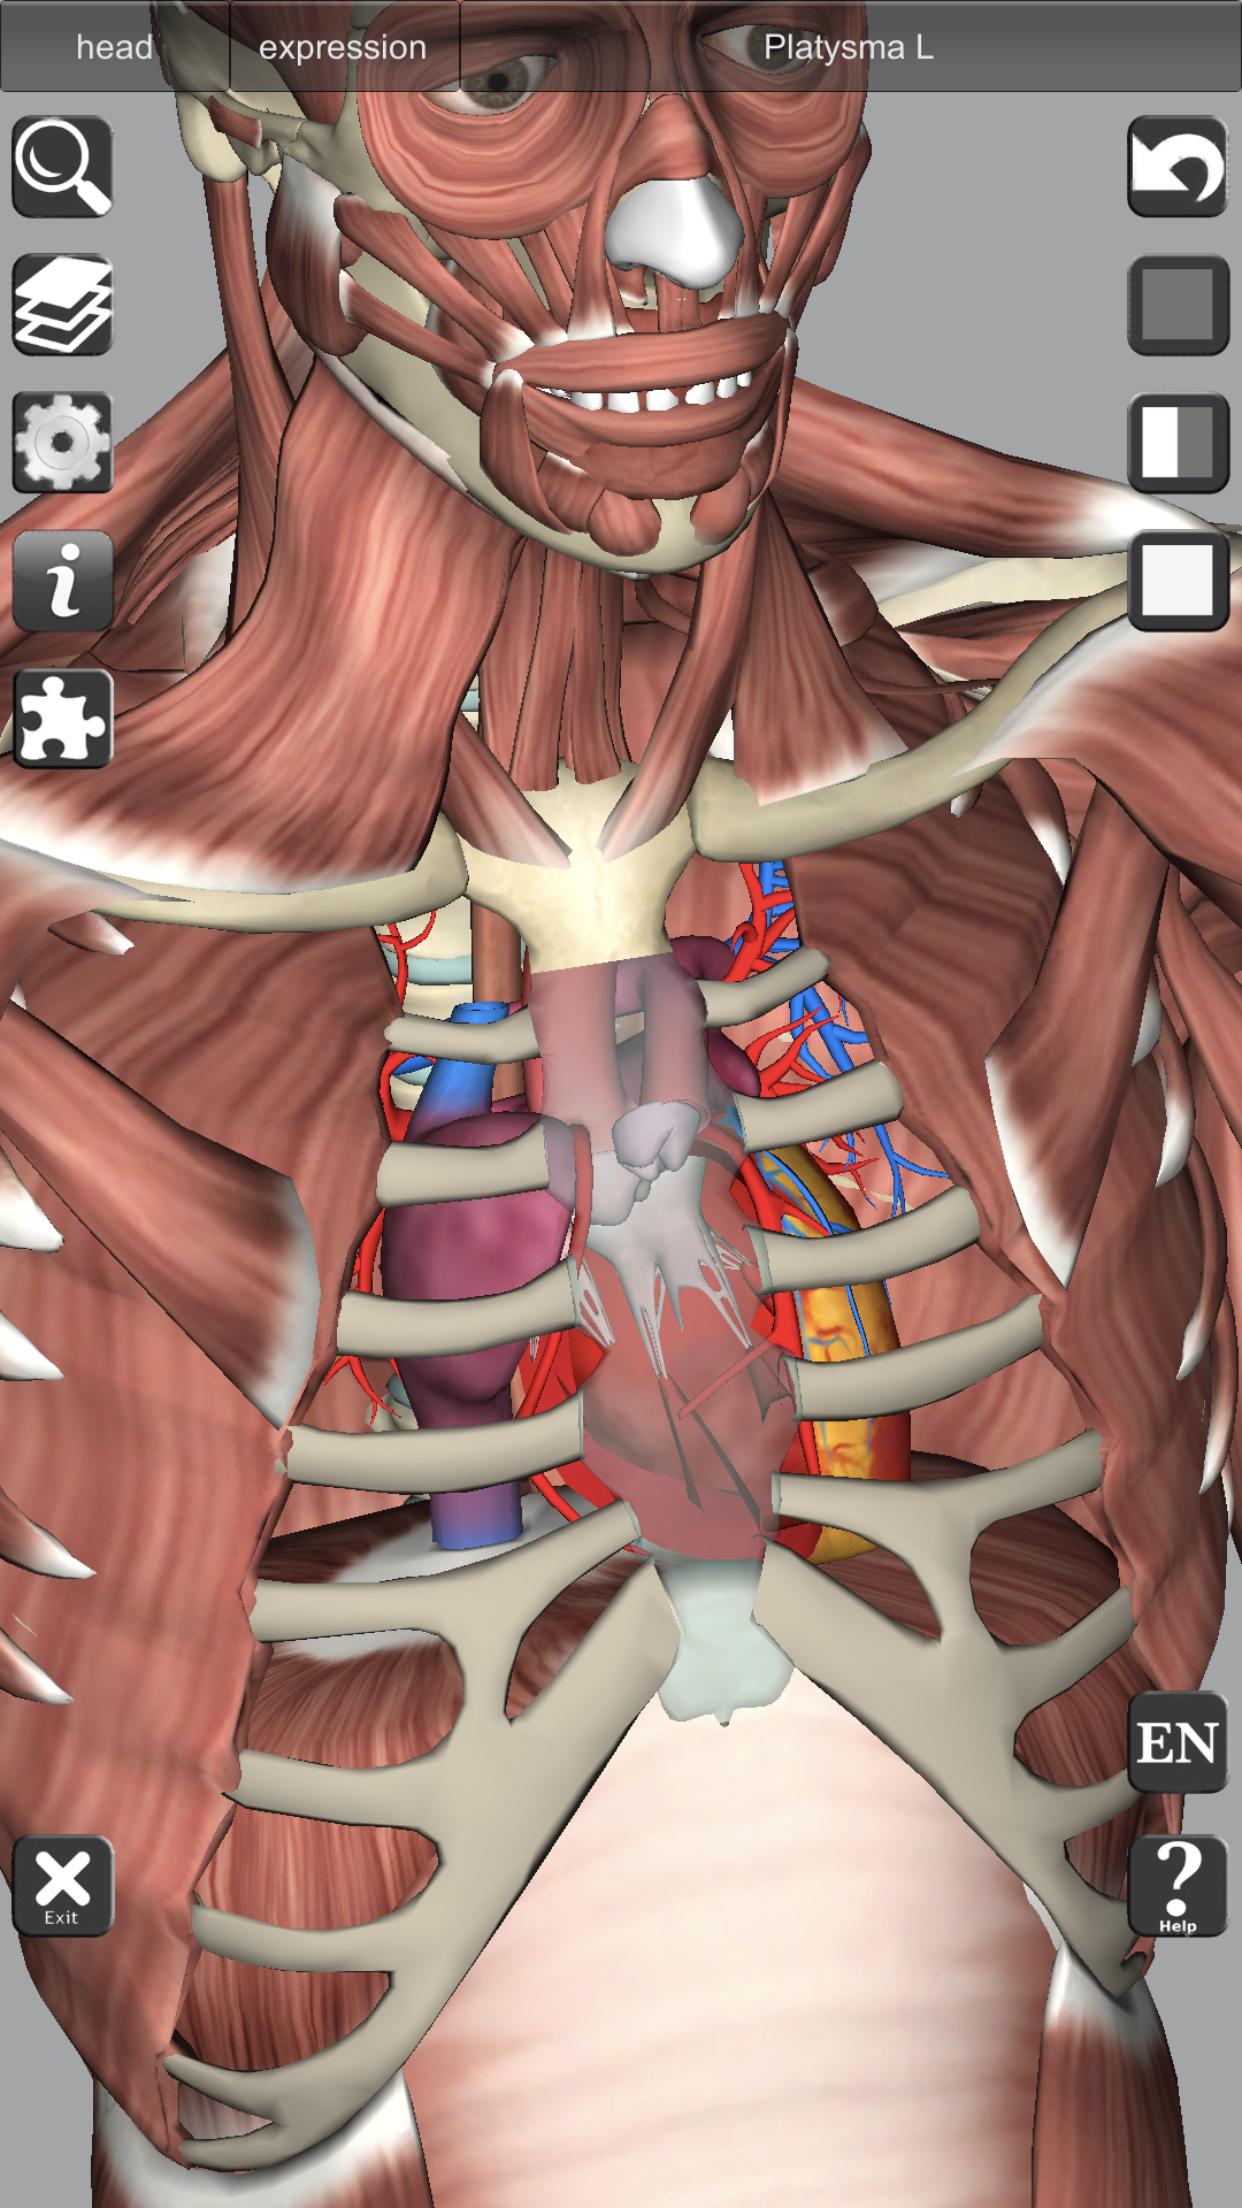 3D Bones and Organs (Anatomy) 4.1 Screenshot 7